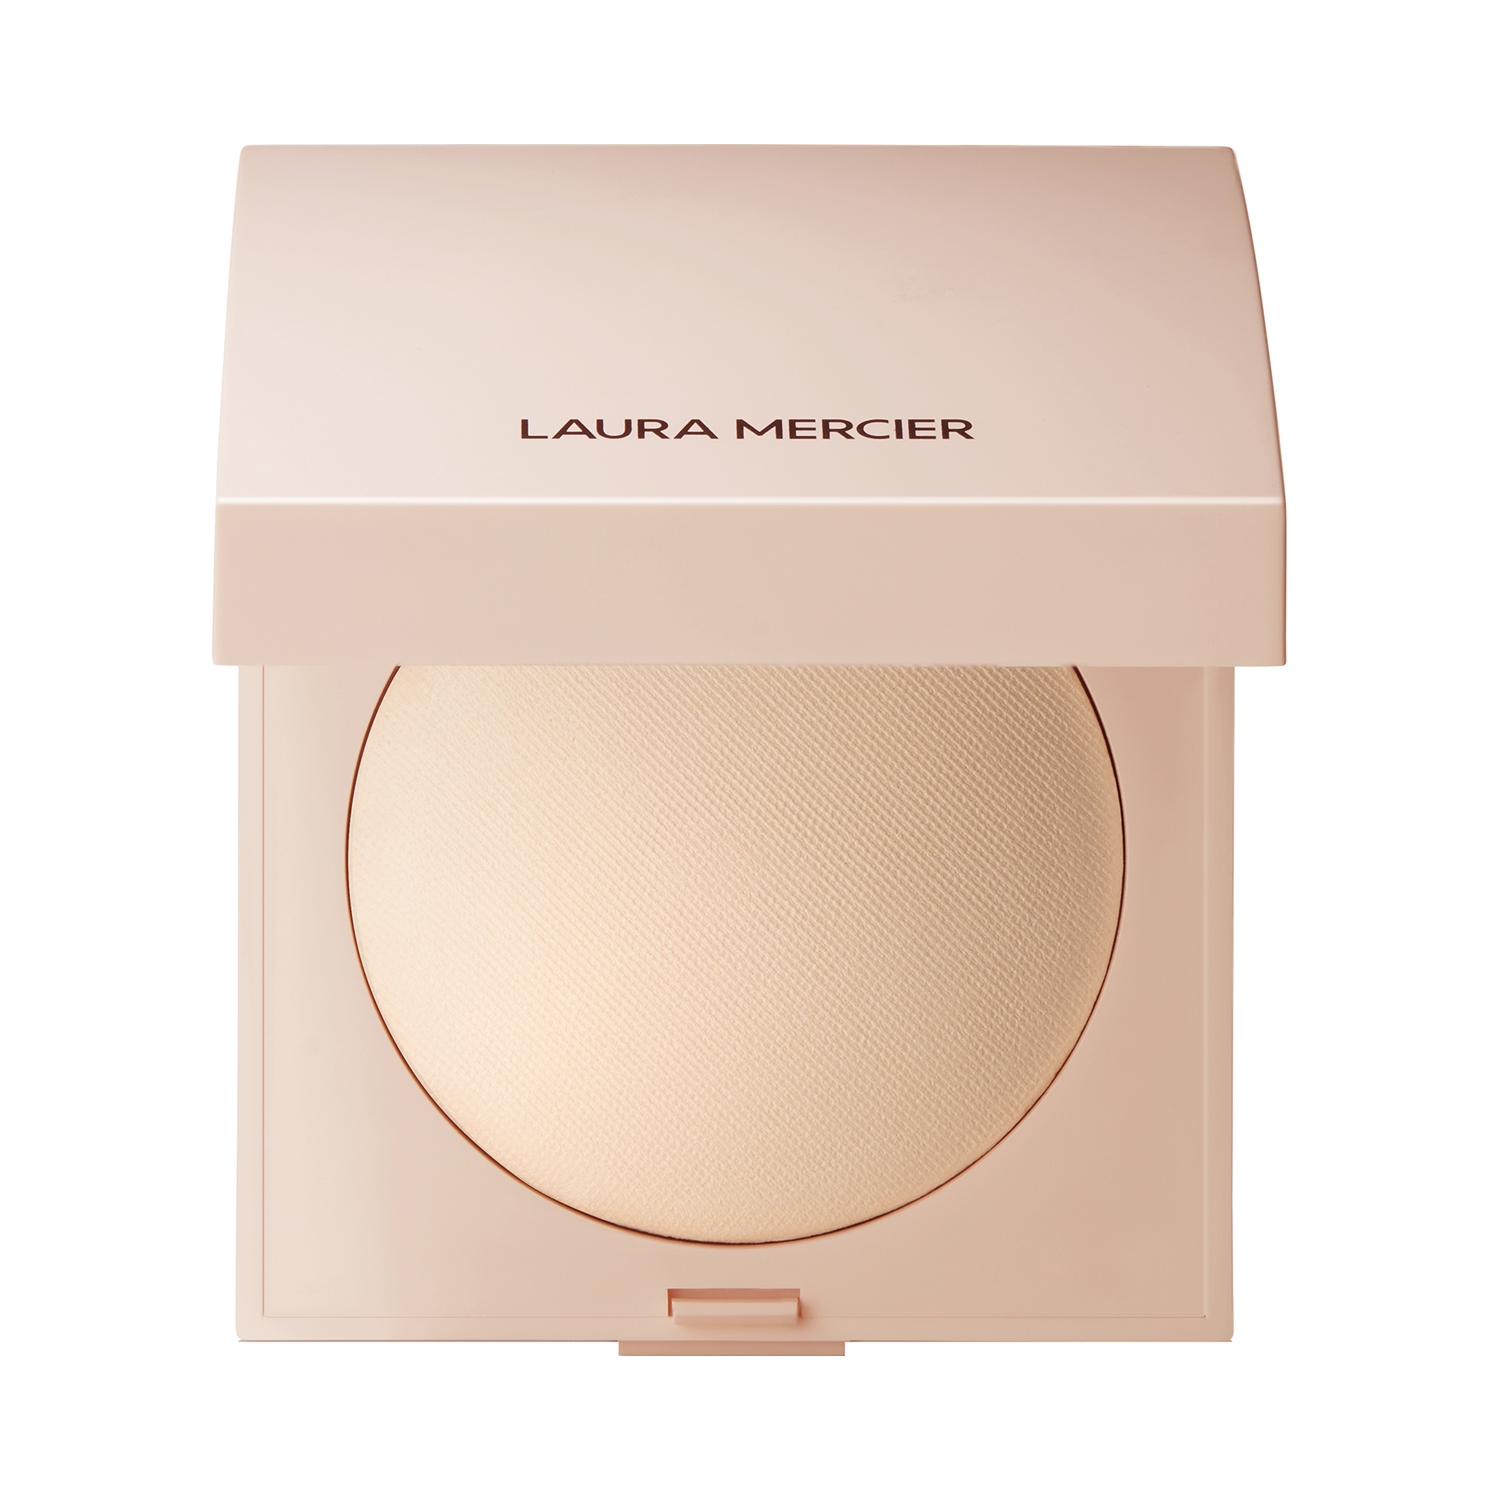 Laura Mercier | Laura Mercier Real Flawless Luminous Perfecting Pressed Powder - Translucent (7g)